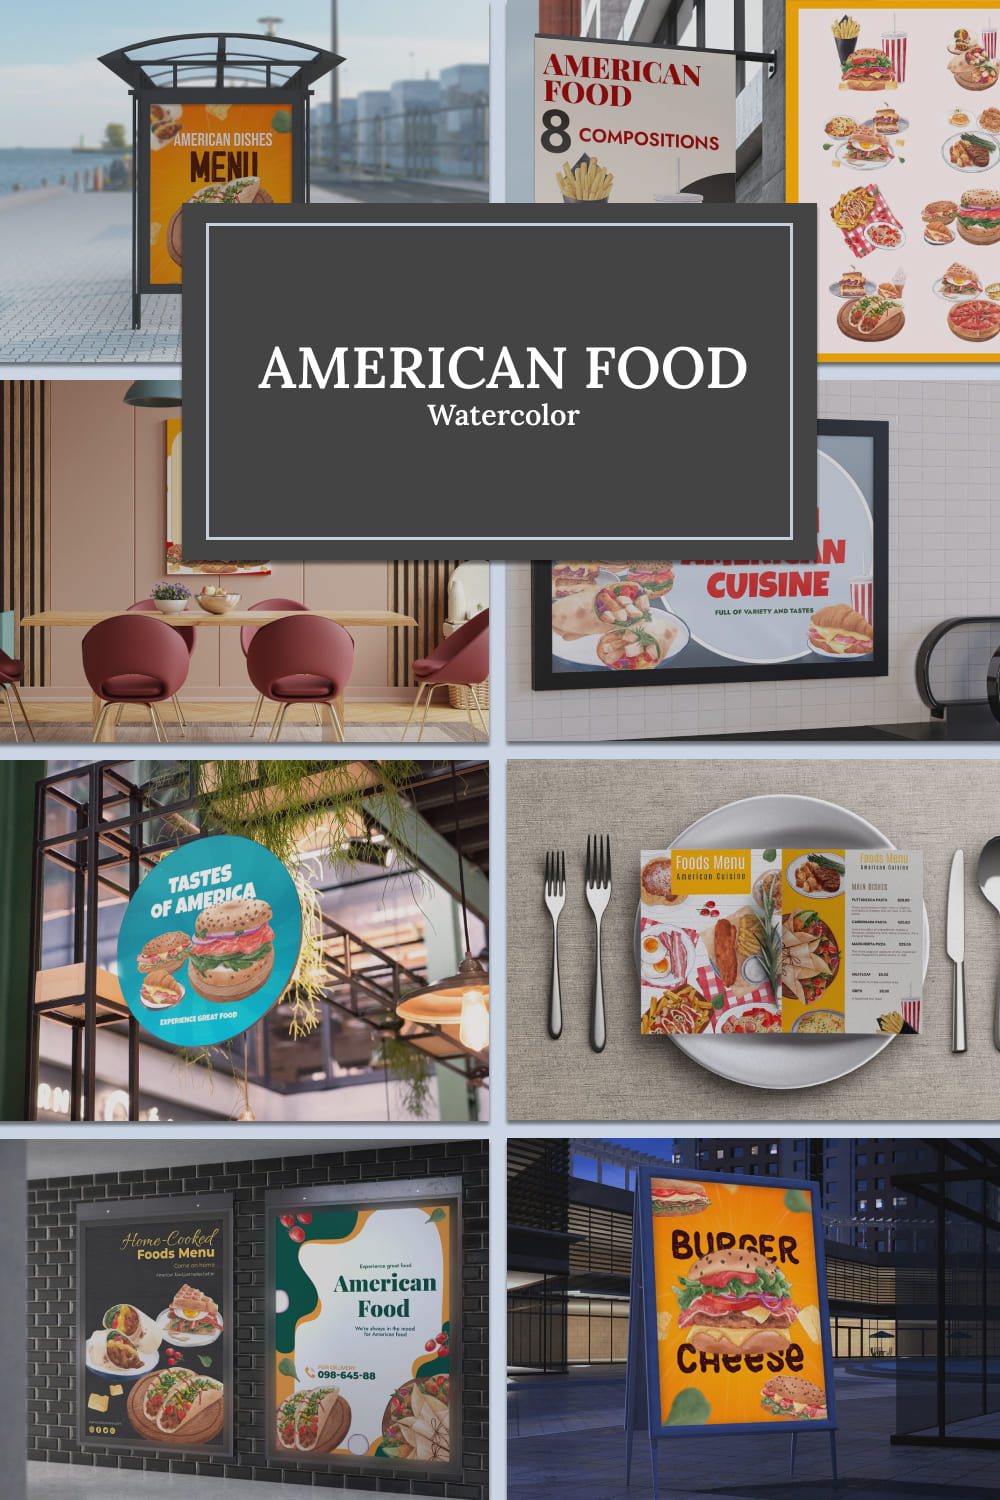 American food watercolor - pinterest image preview.